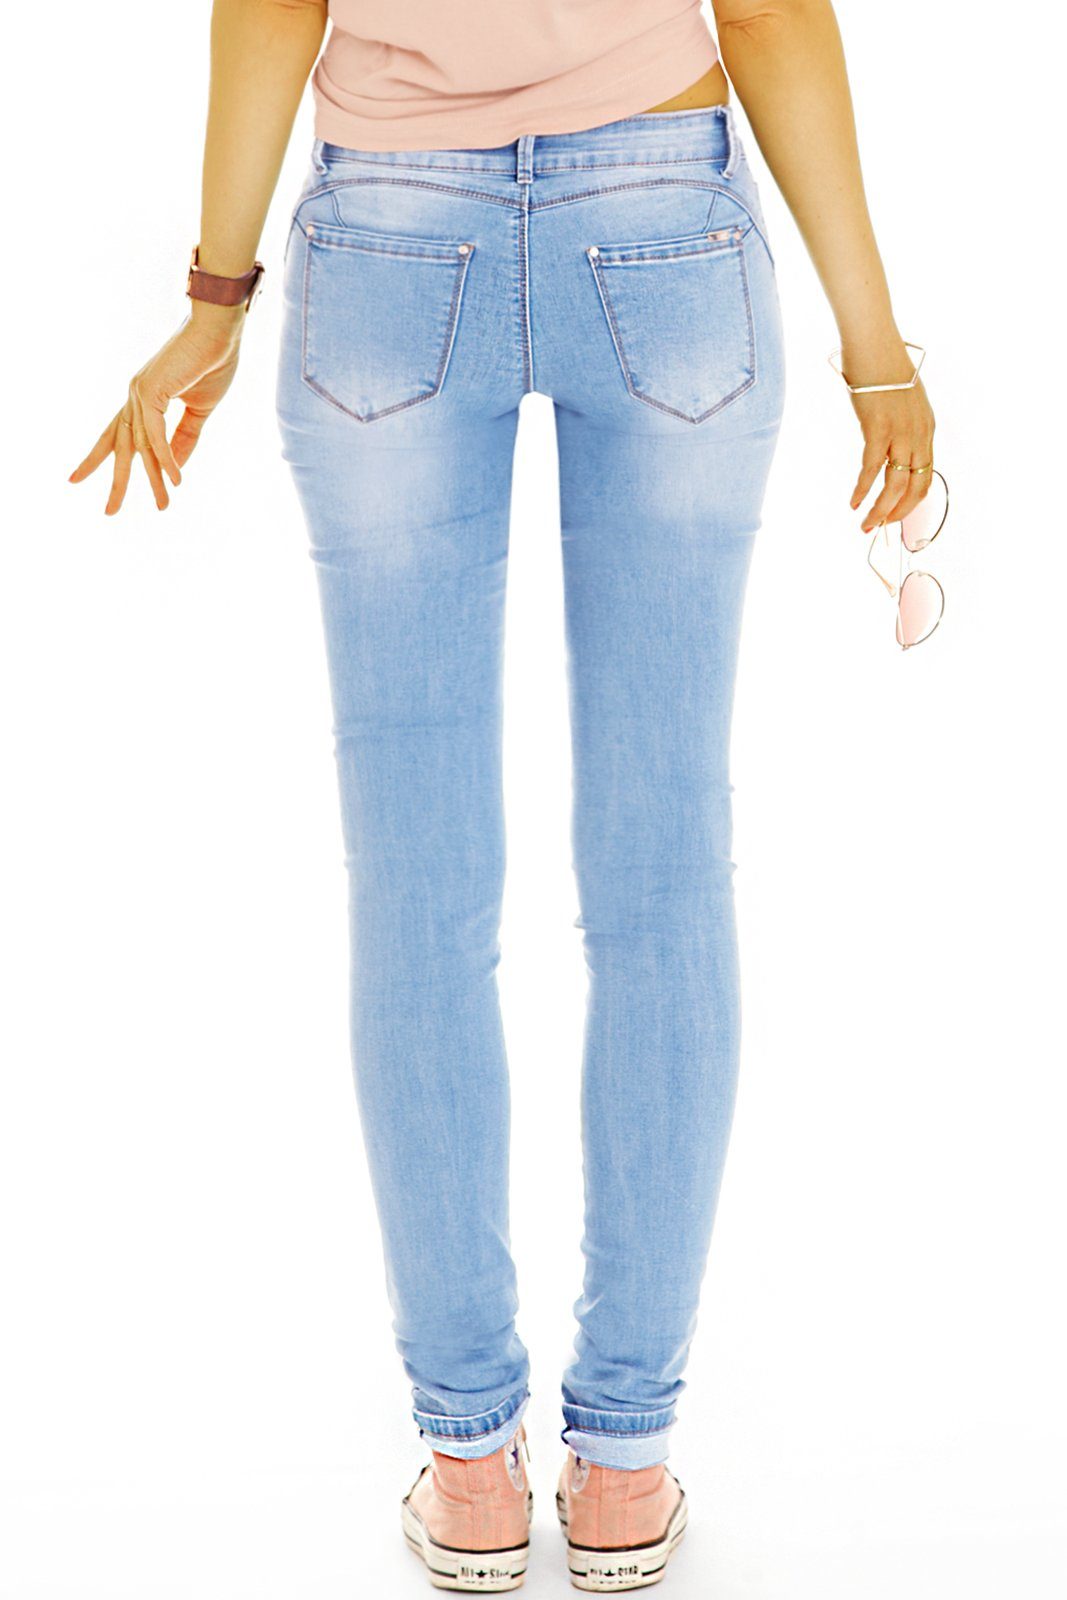 Low-rise-Jeans 5-Pocket-Style Hose - Hüftjeans Leibhöhe Low - niedrige mit Stretch-Anteil, Jeans dunkelblau Damen be j36p Rise styled